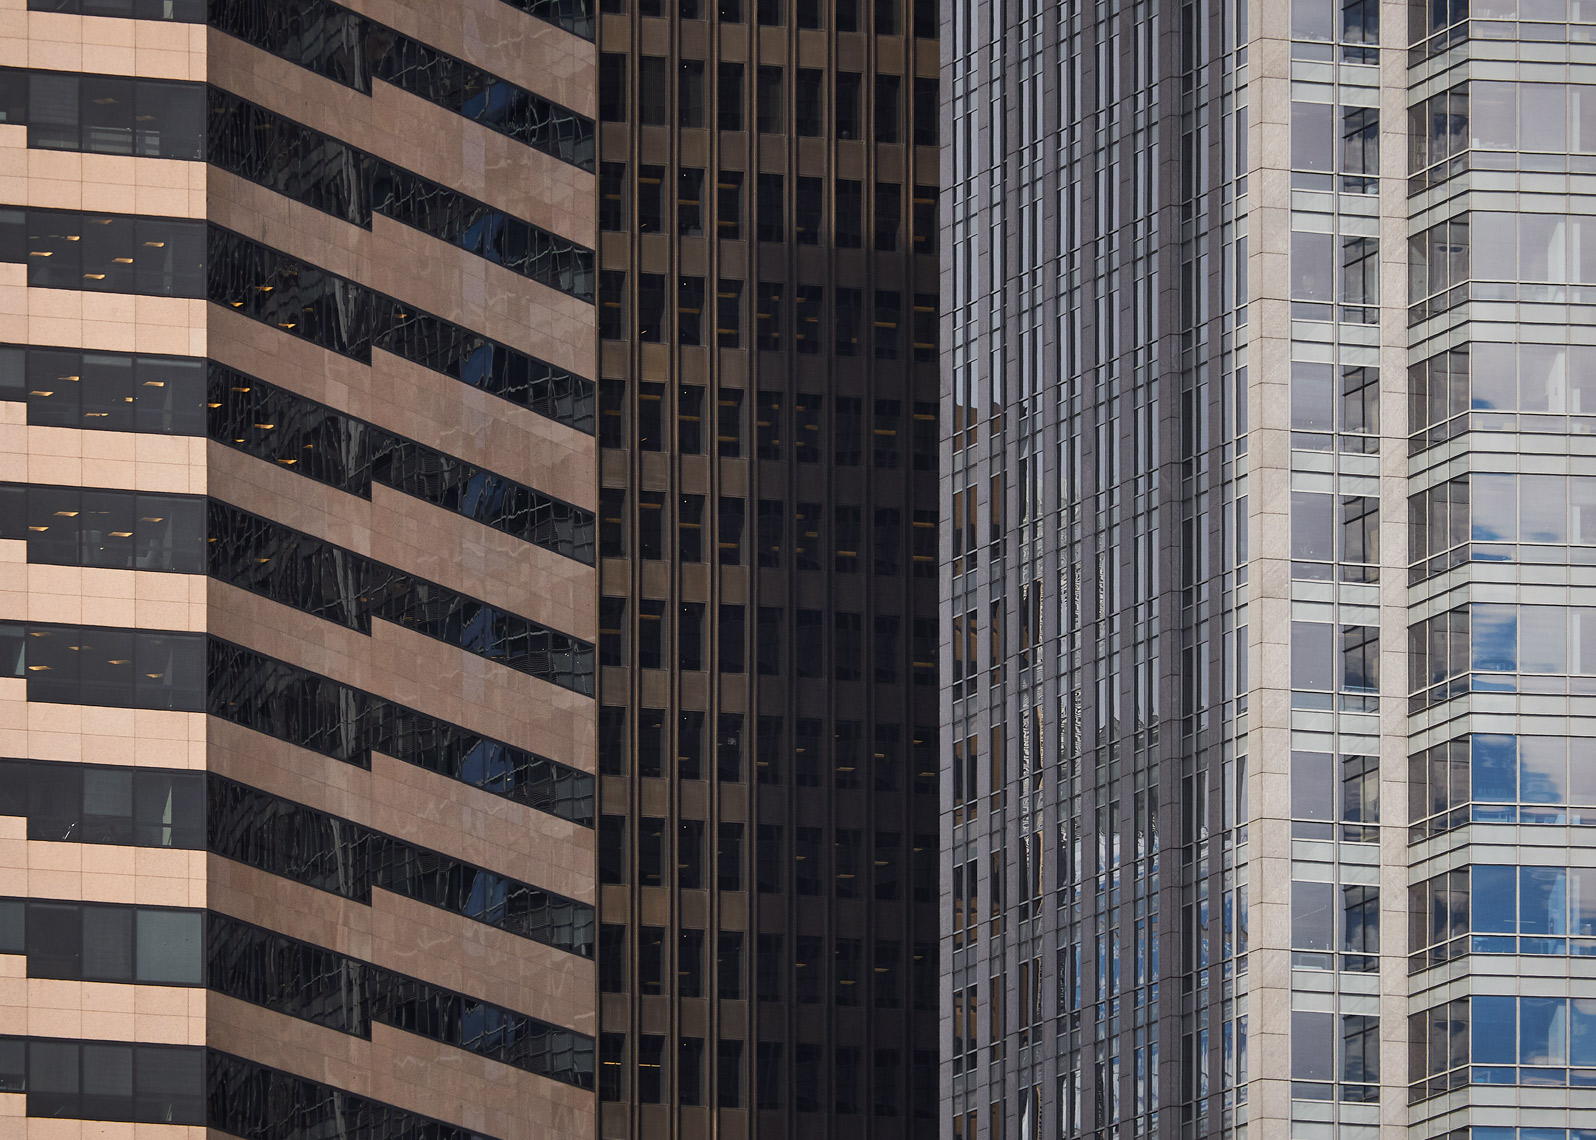 detail cityscape photo of buildings